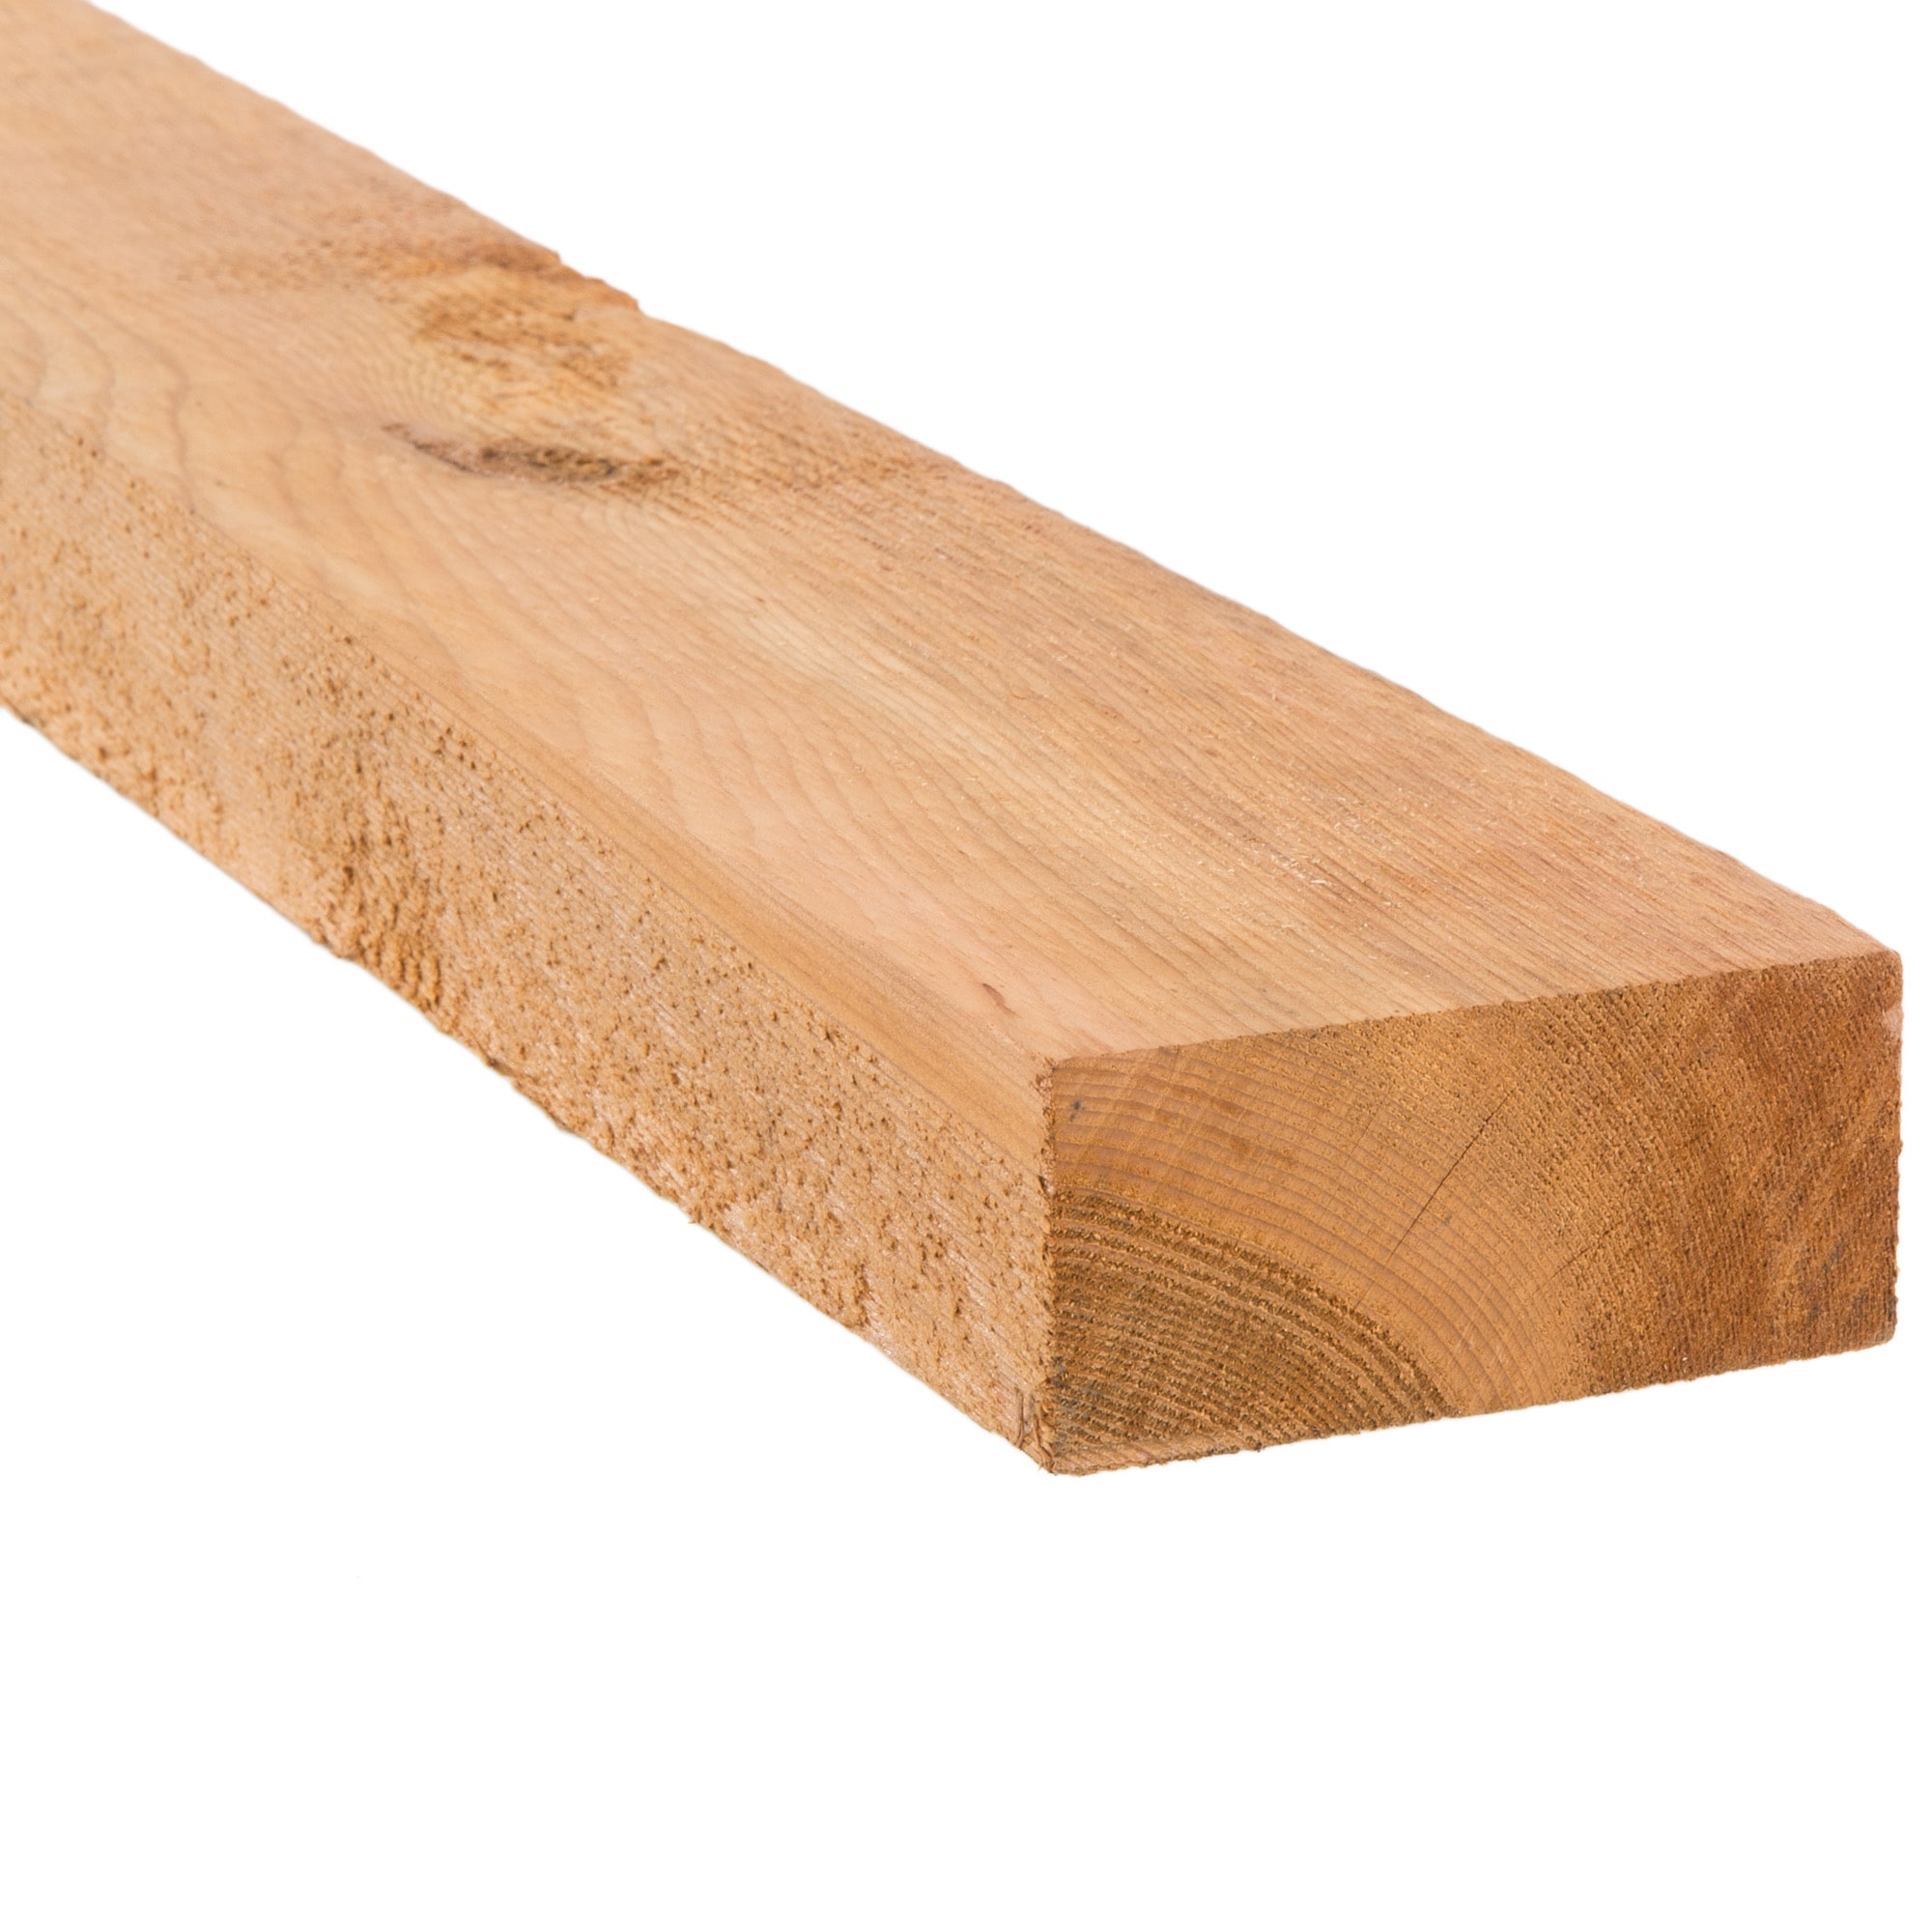 2in x 4in x 16ft Cedar Green Lumber at